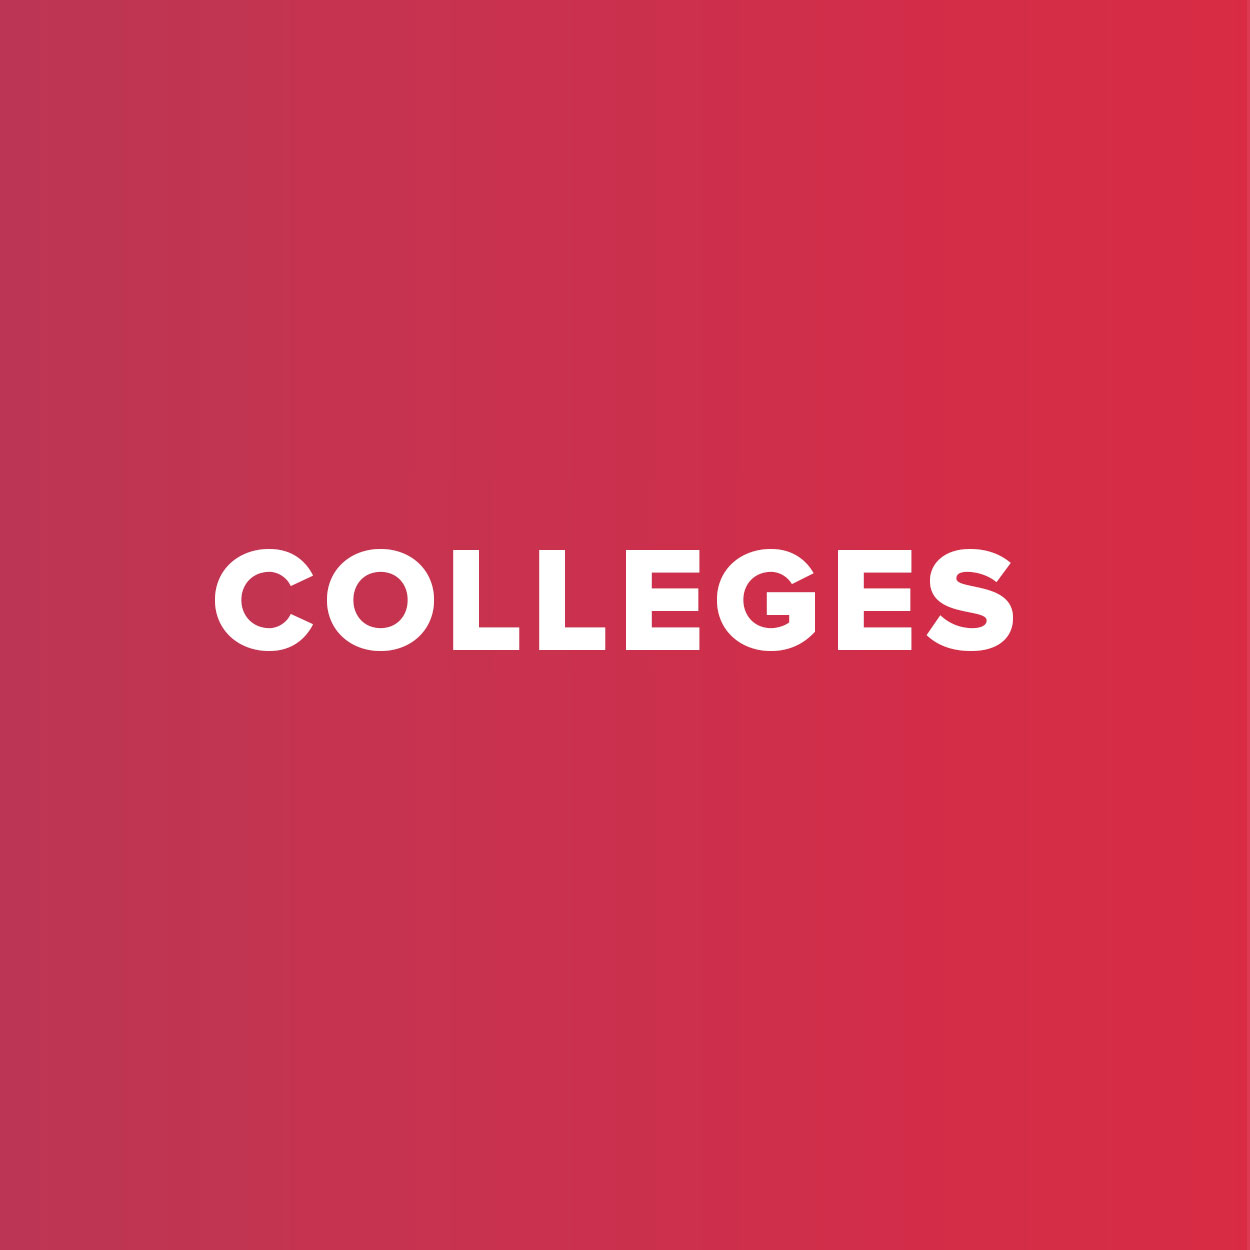 Colleges-01